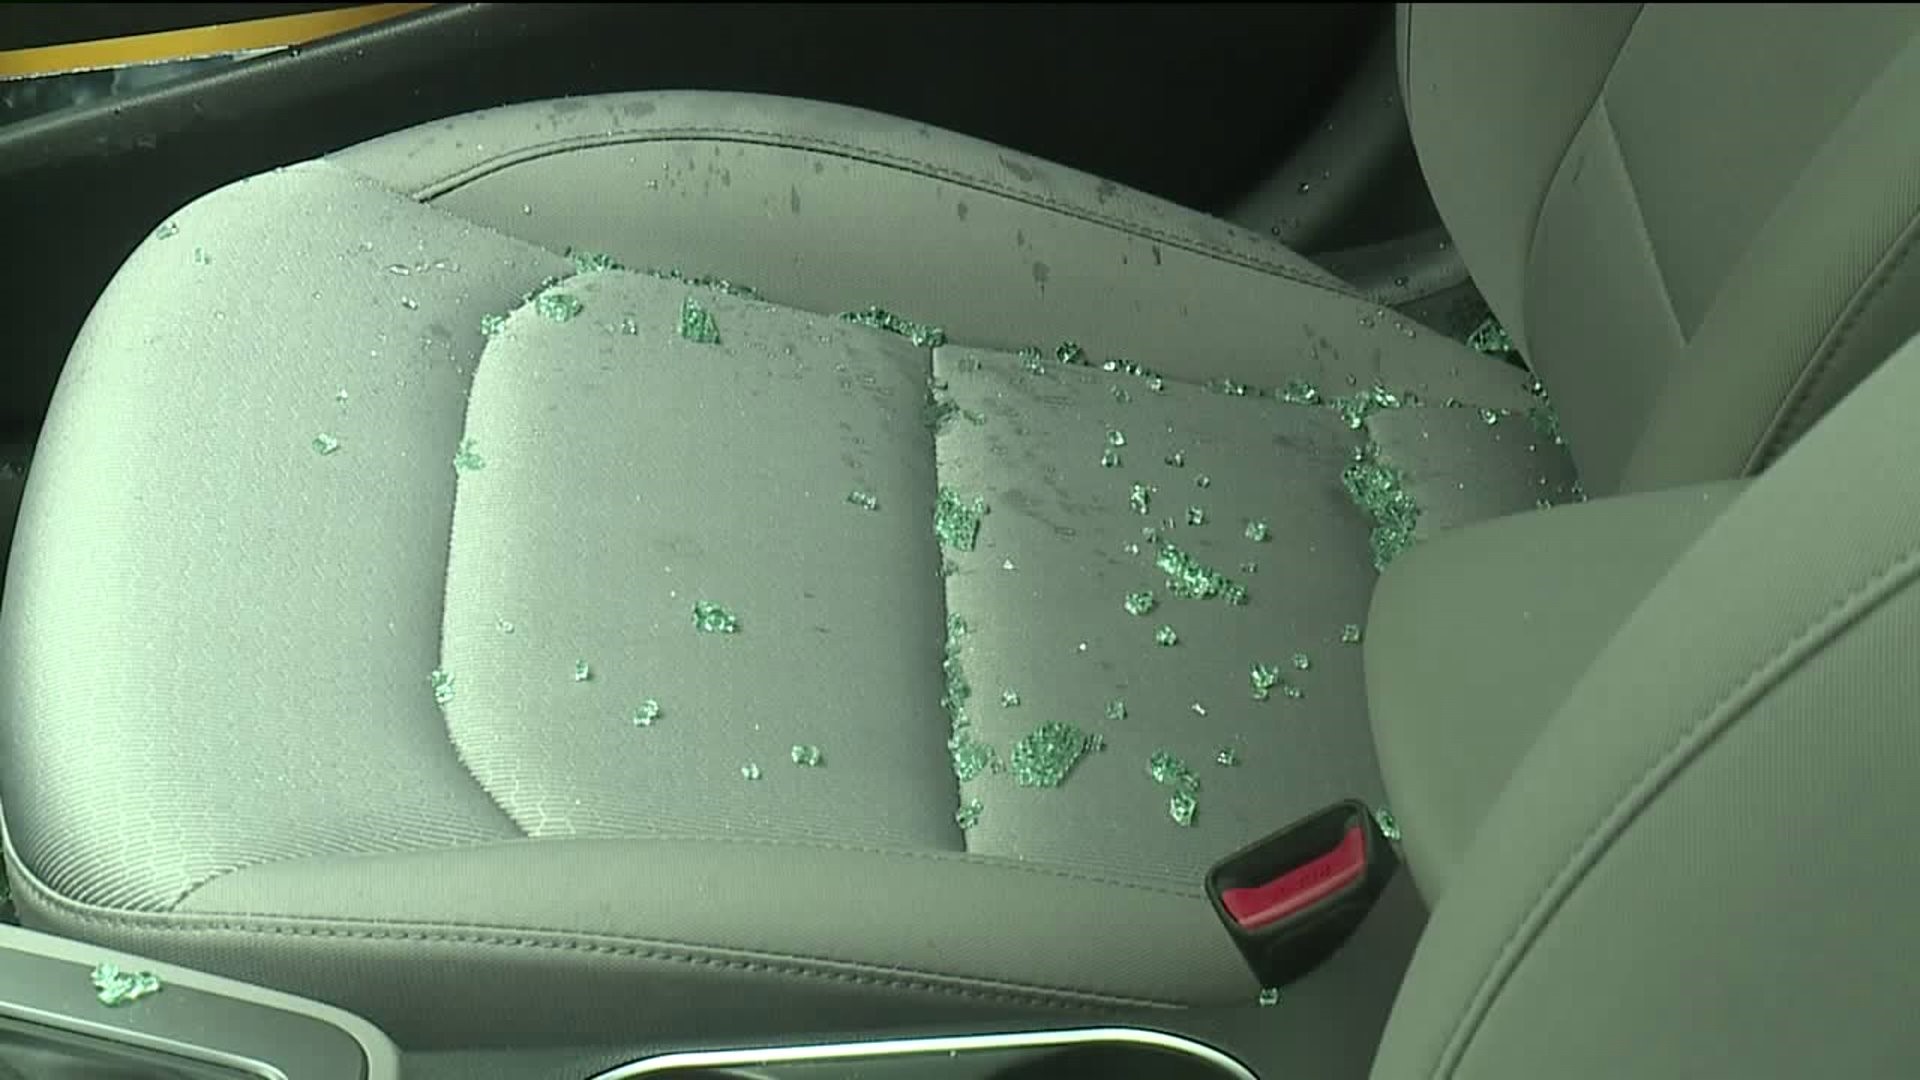 Dozens of Car Windows Smashed in Scranton Vandalism Spree